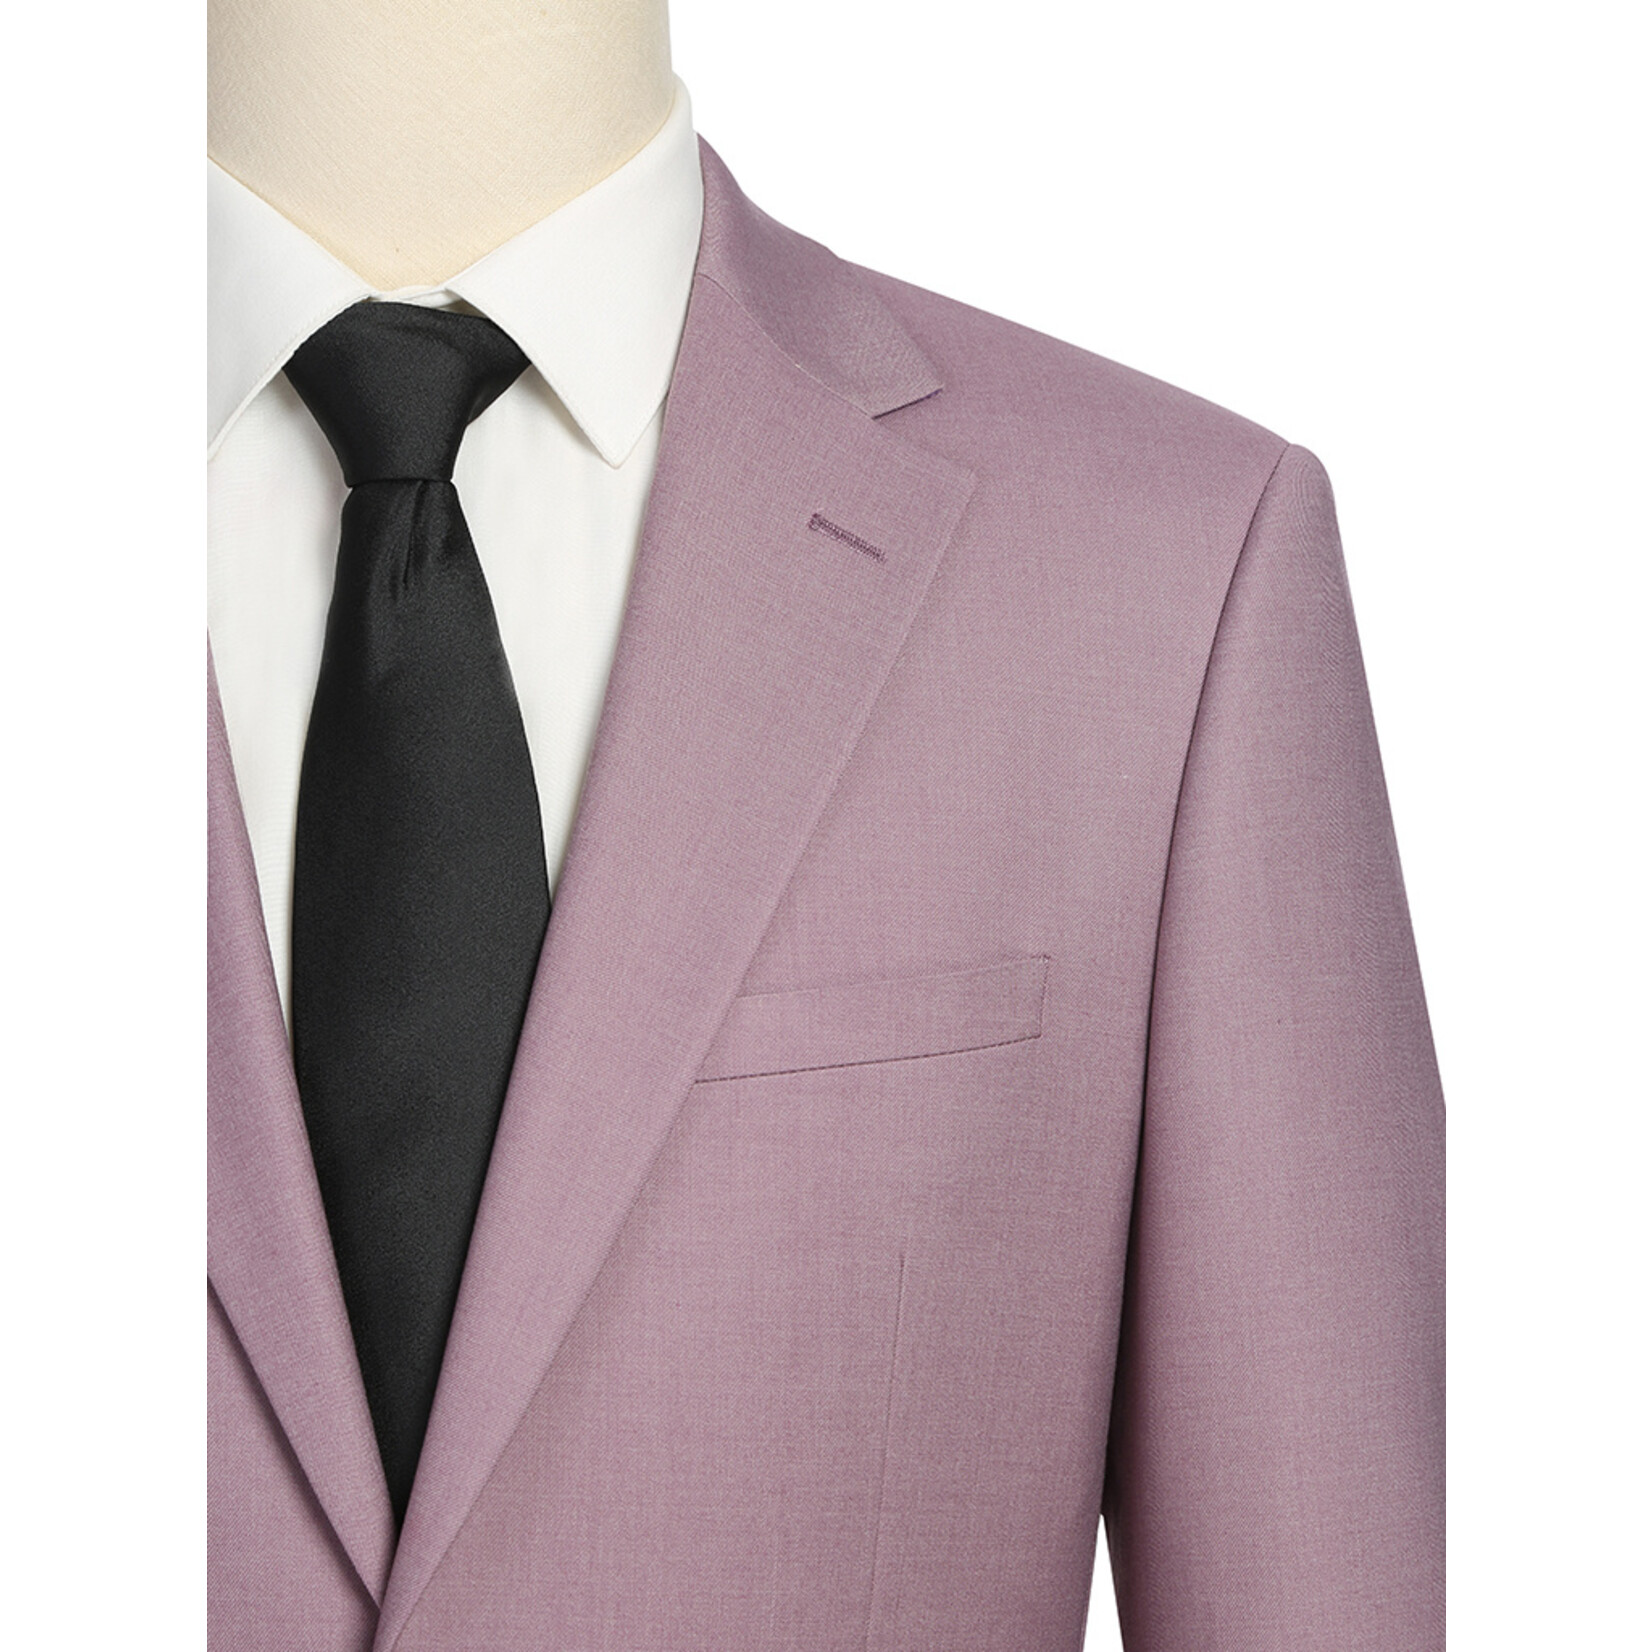 Renoir Renoir Slim Fit Suit 201-12 Rose WEB ONLY